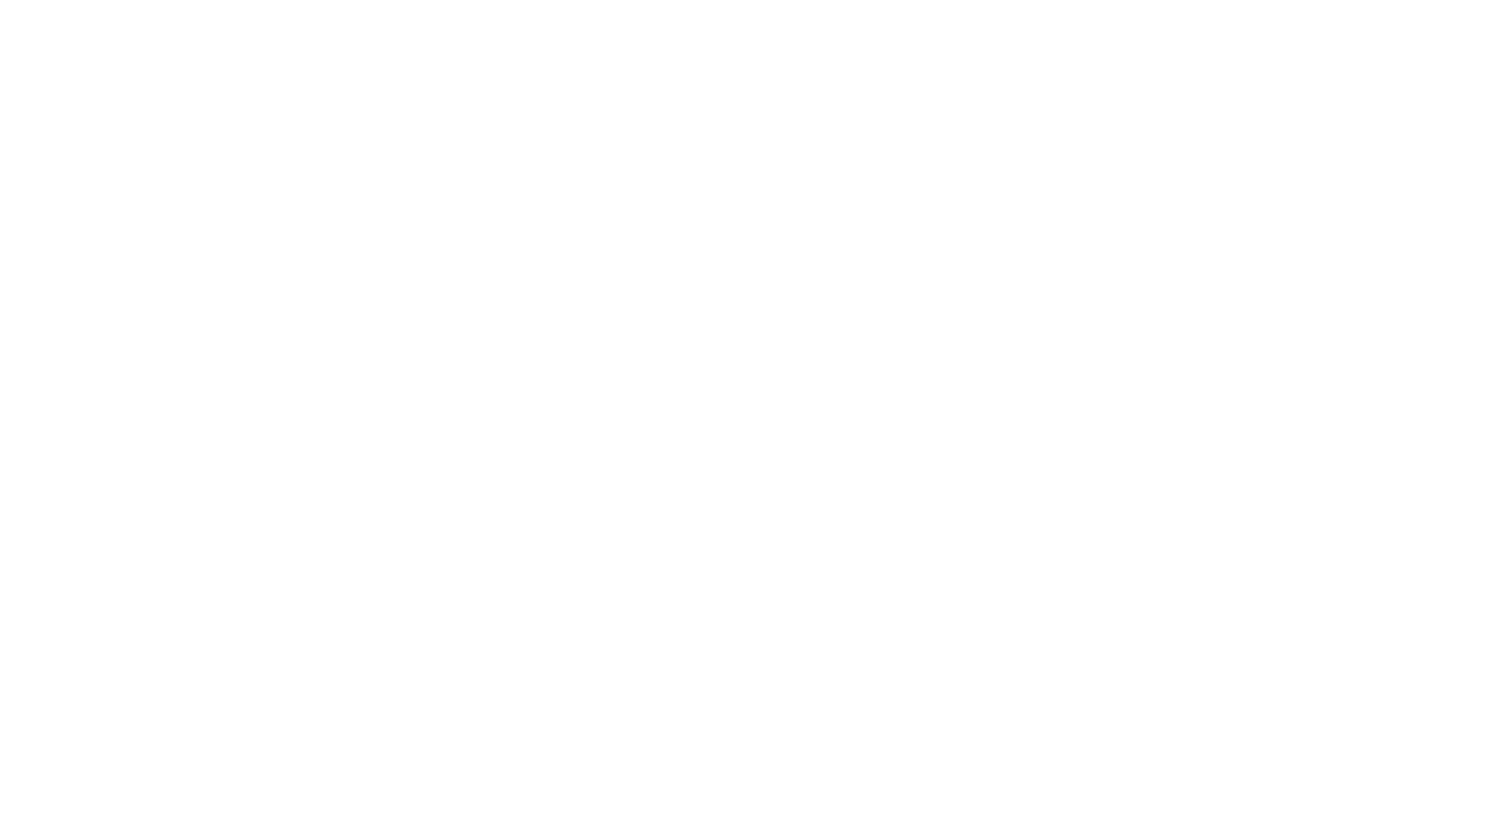 Pippa Norris